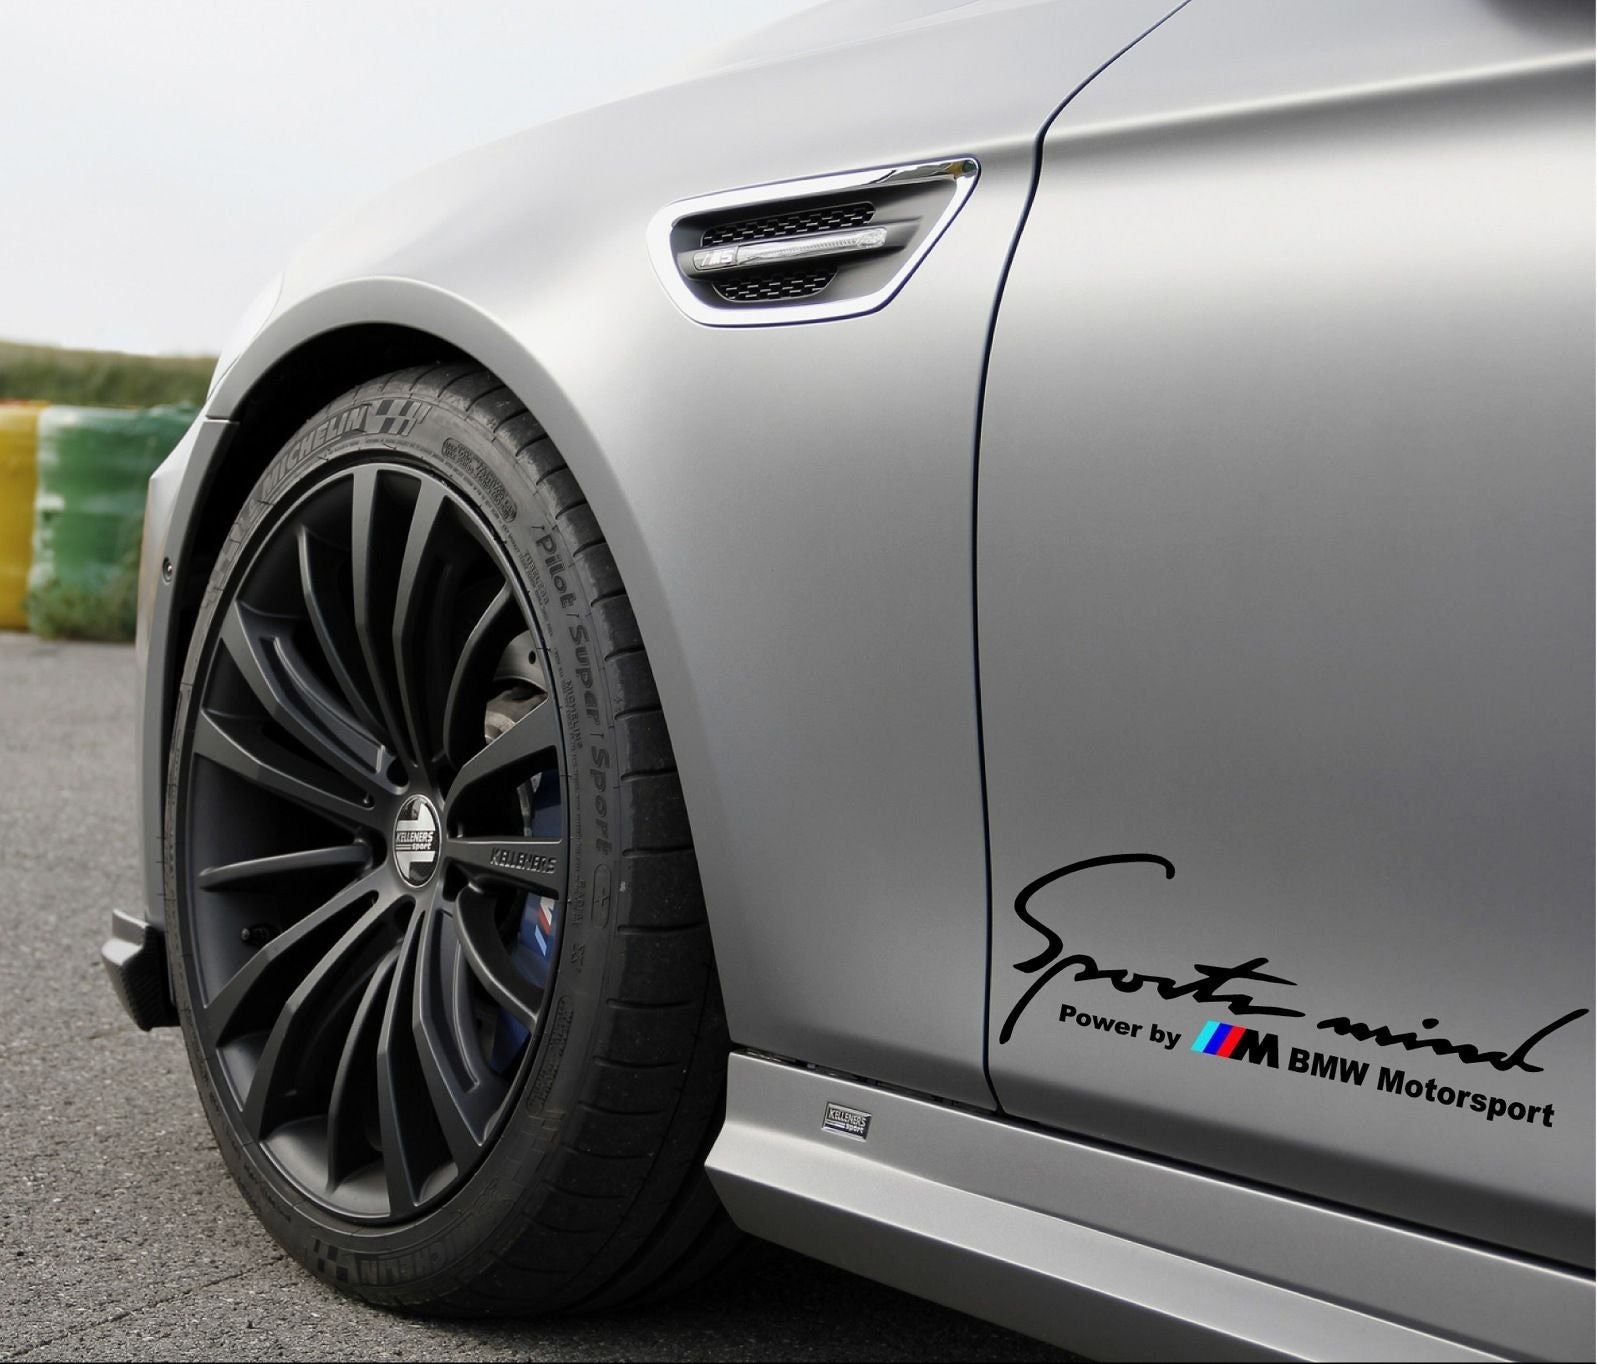 4 x BMW M Power car body graphic vinyl Decal Sticker fits M series 520 320